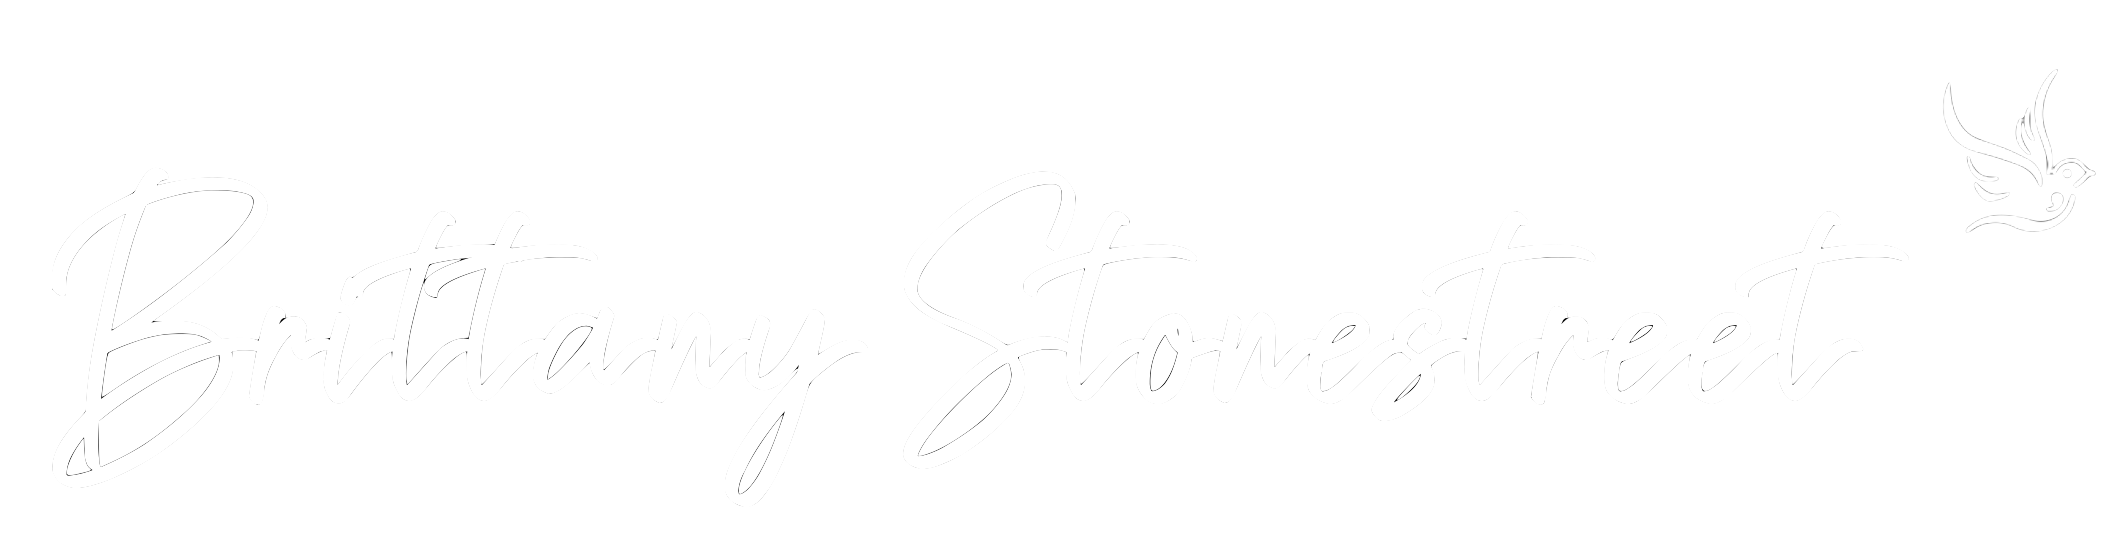 Brittany Stonestreet signature with dove logo